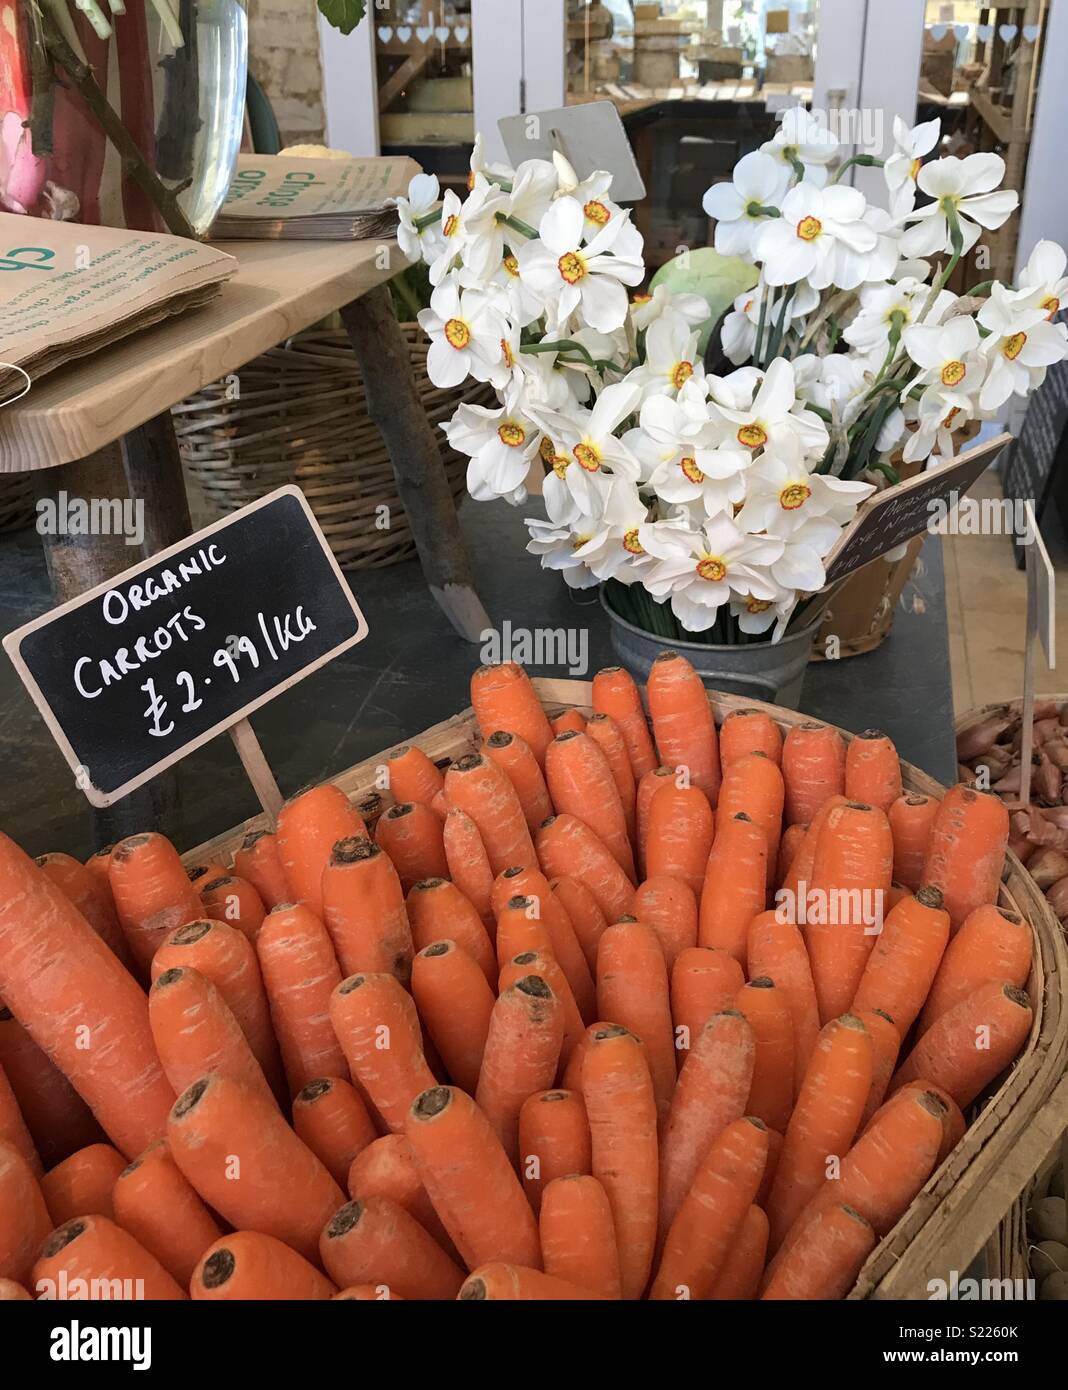 Posh carrots Stock Photo